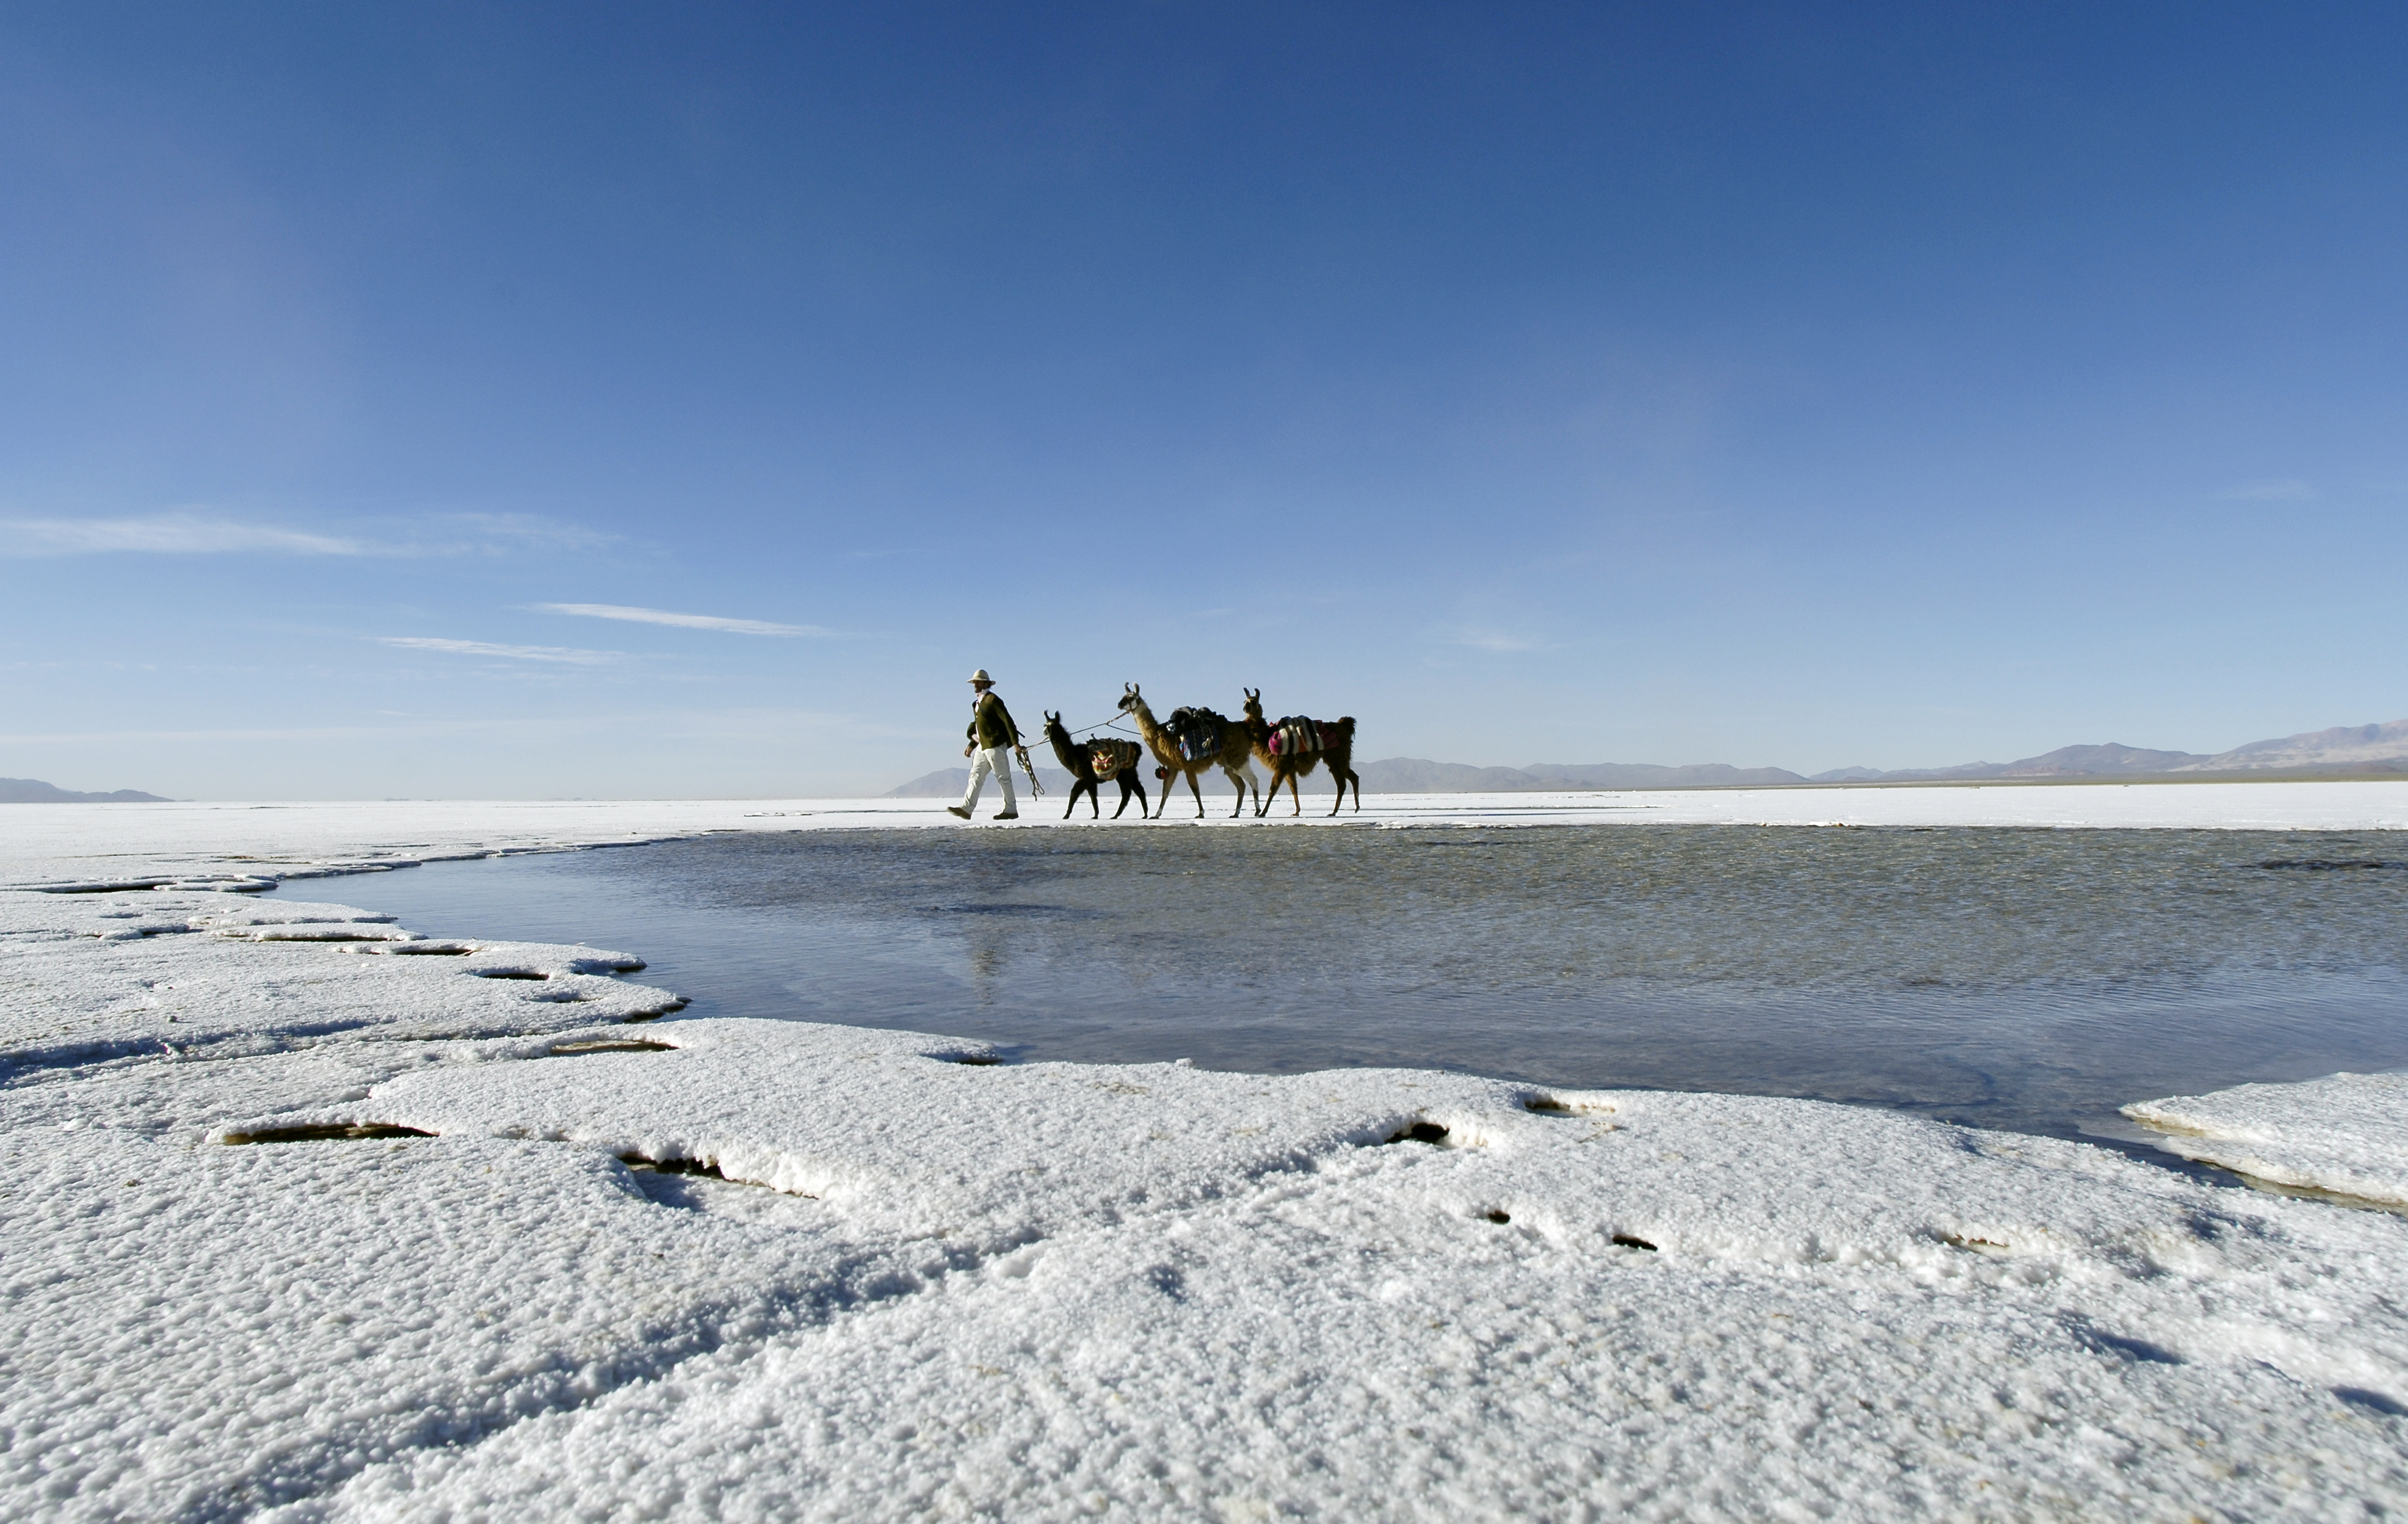 wp-content/uploads/itineraries/Argentina/Northwest Argentina/salinas con llamas.jpg